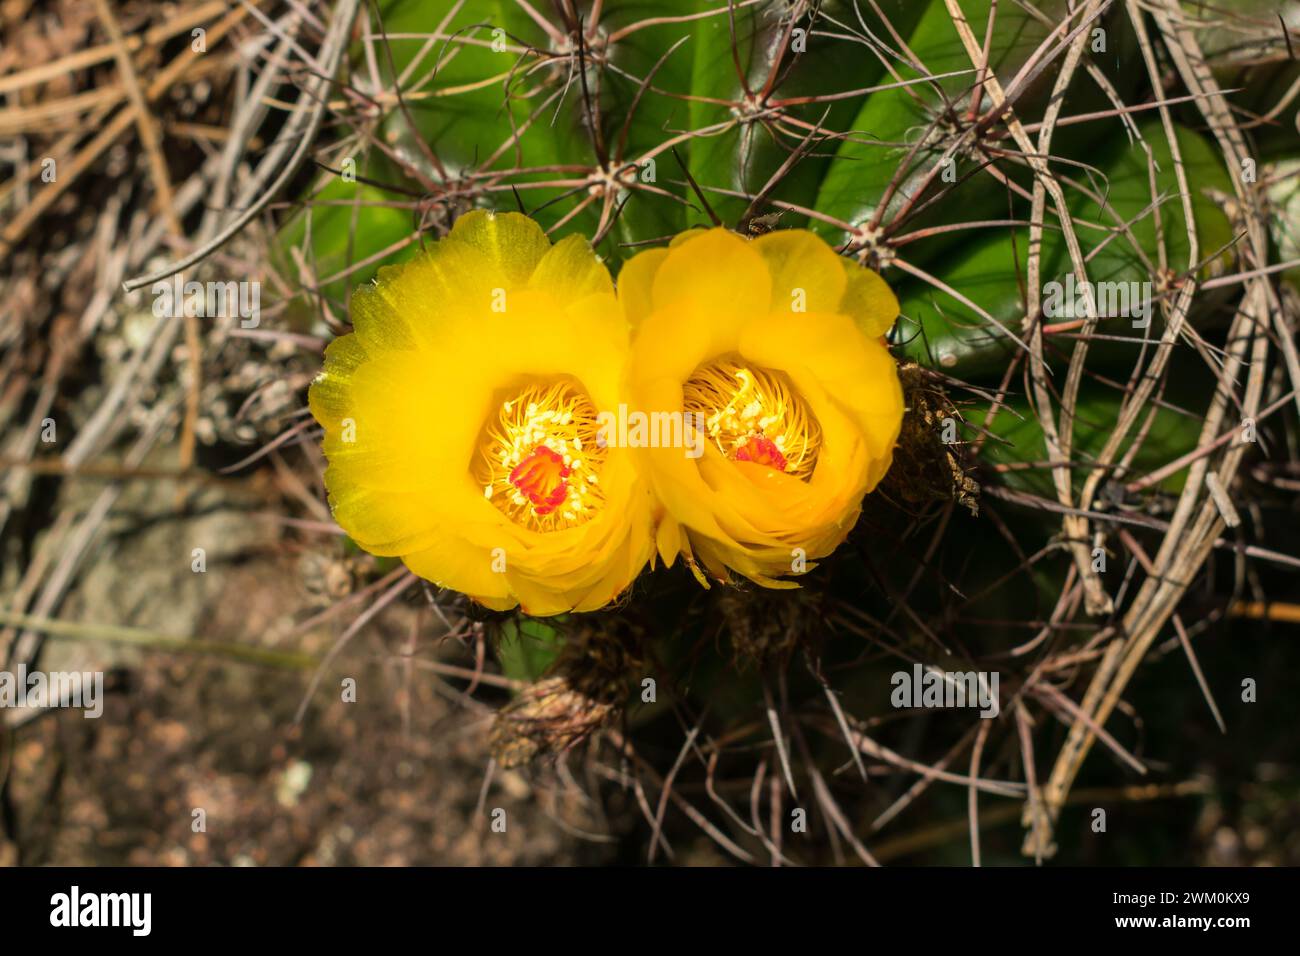 Wild Parodia ottonis cactus in bloom, vulnerable species at the Ronda Municipal Natural Park in Sao Francisco de Paula, South of Brazil Stock Photo